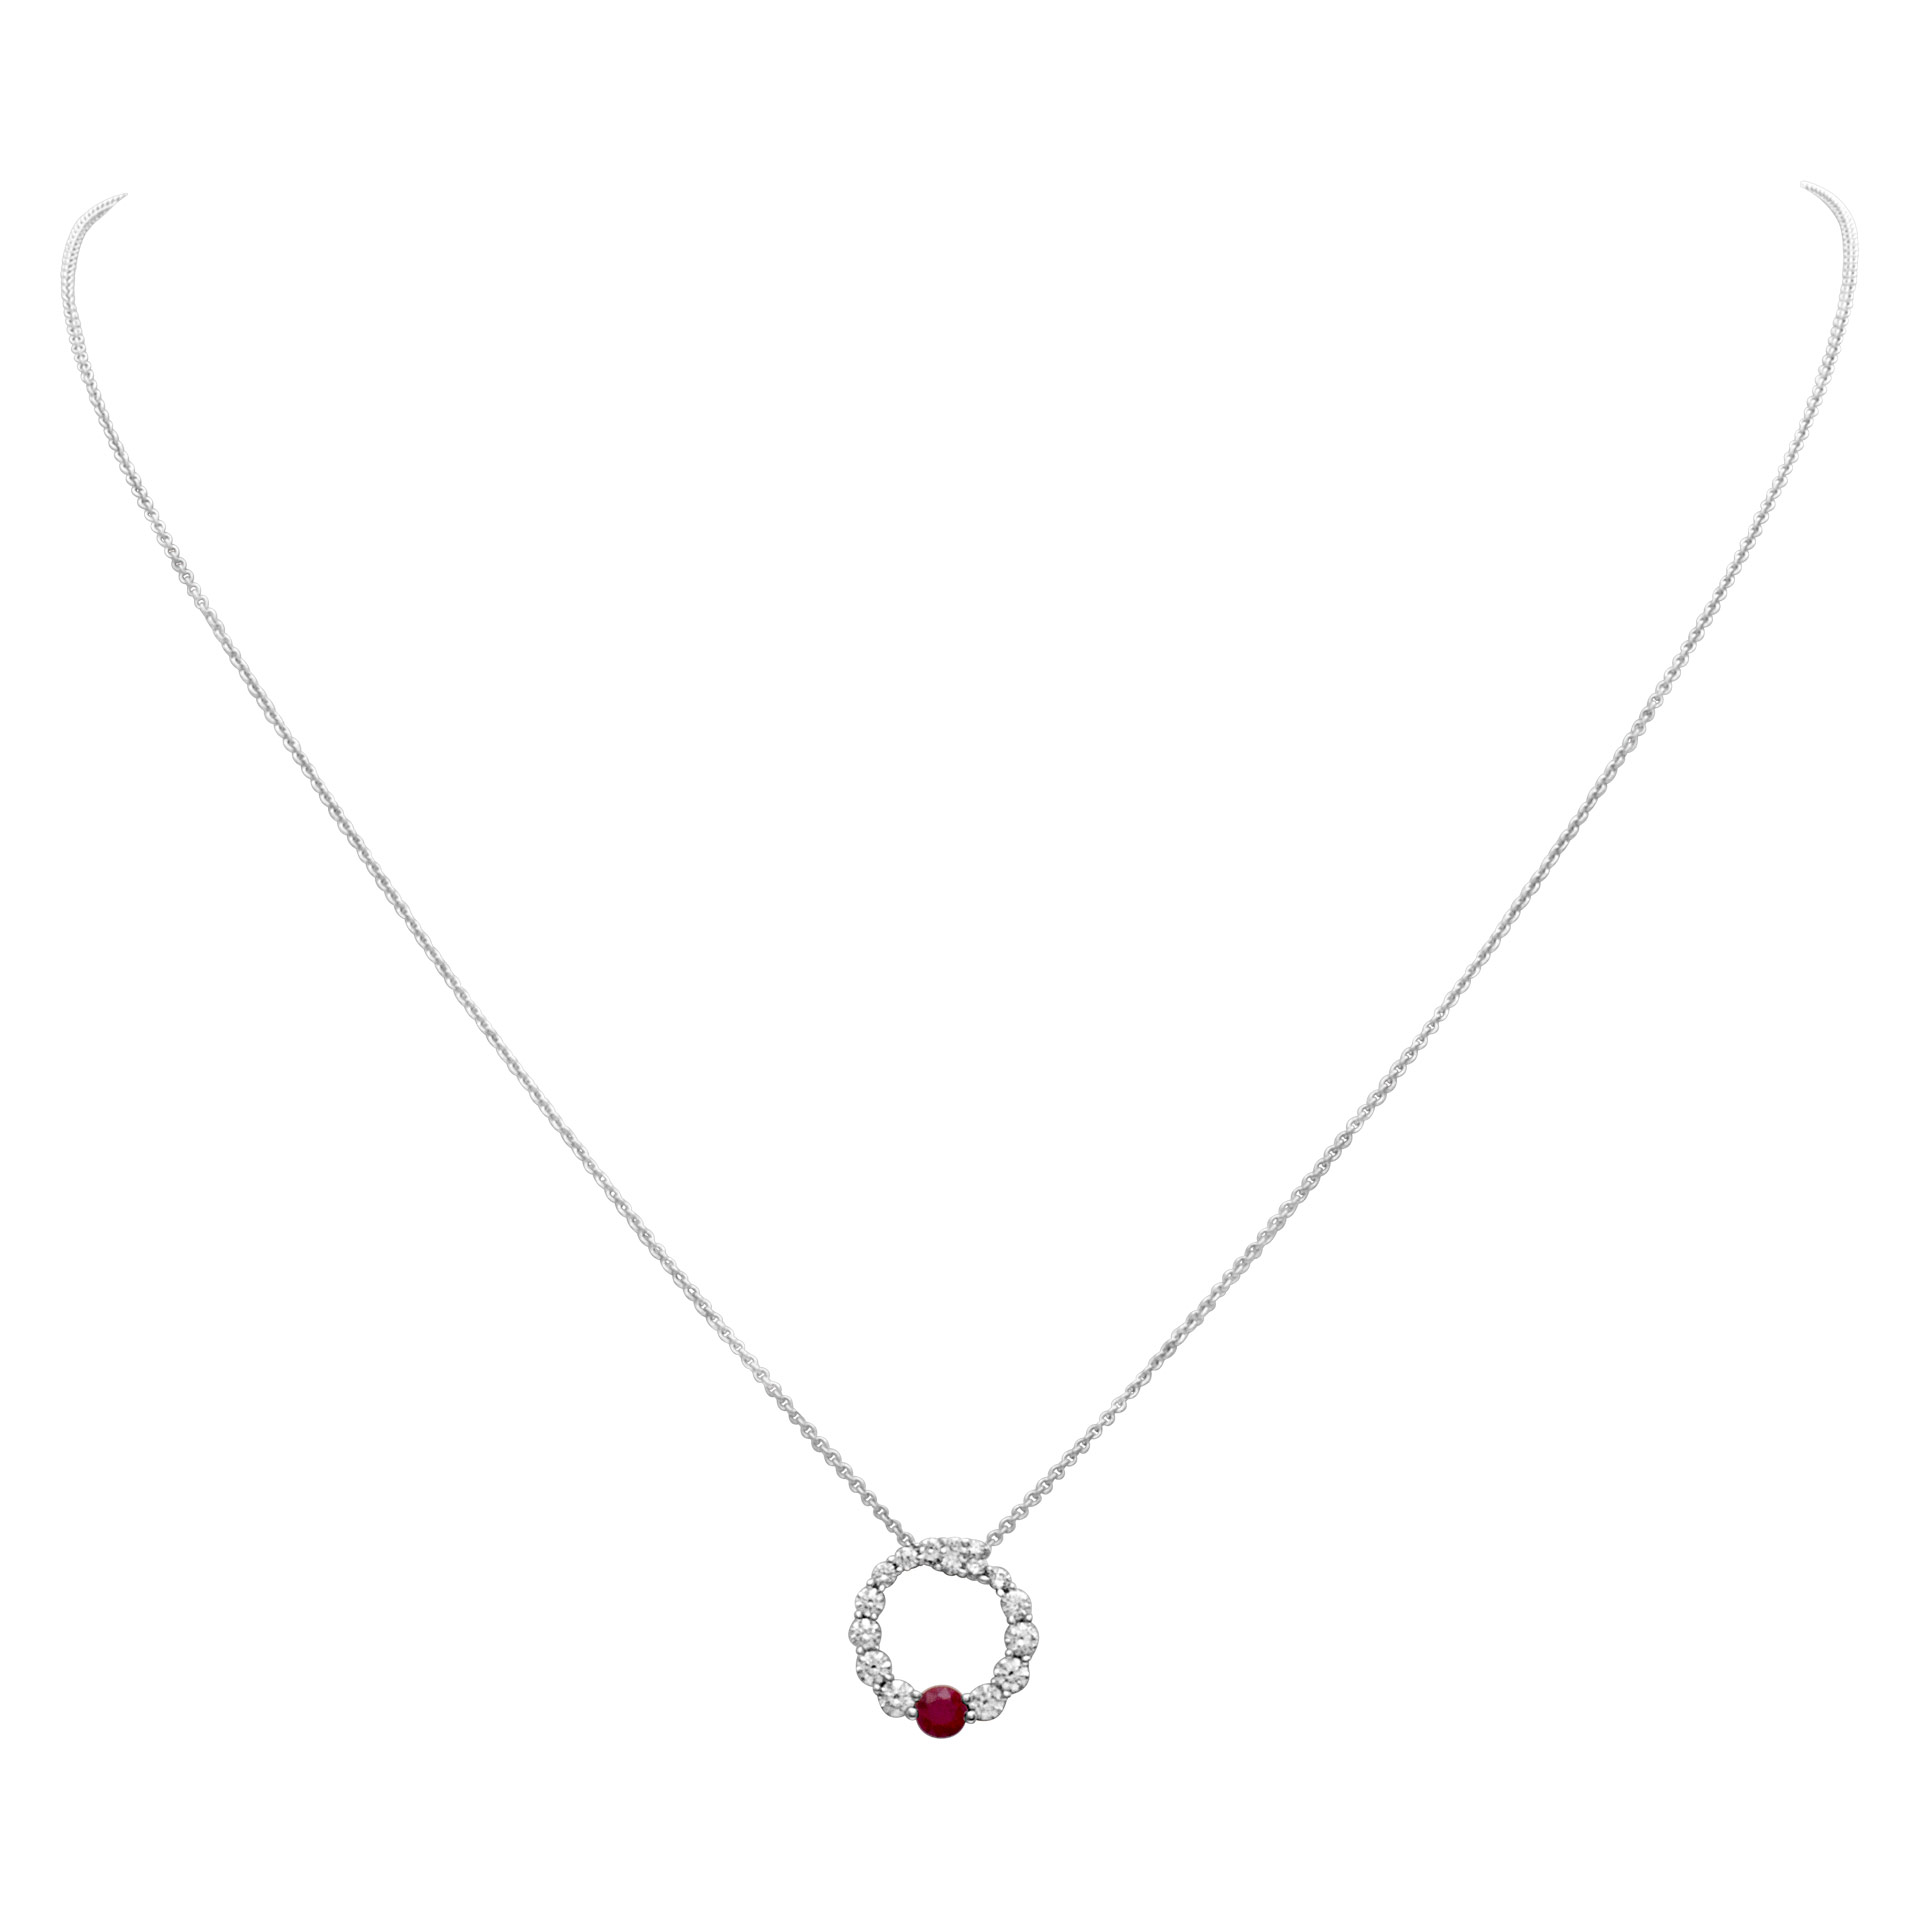 Ruby & diamond pendant in 14k white gold